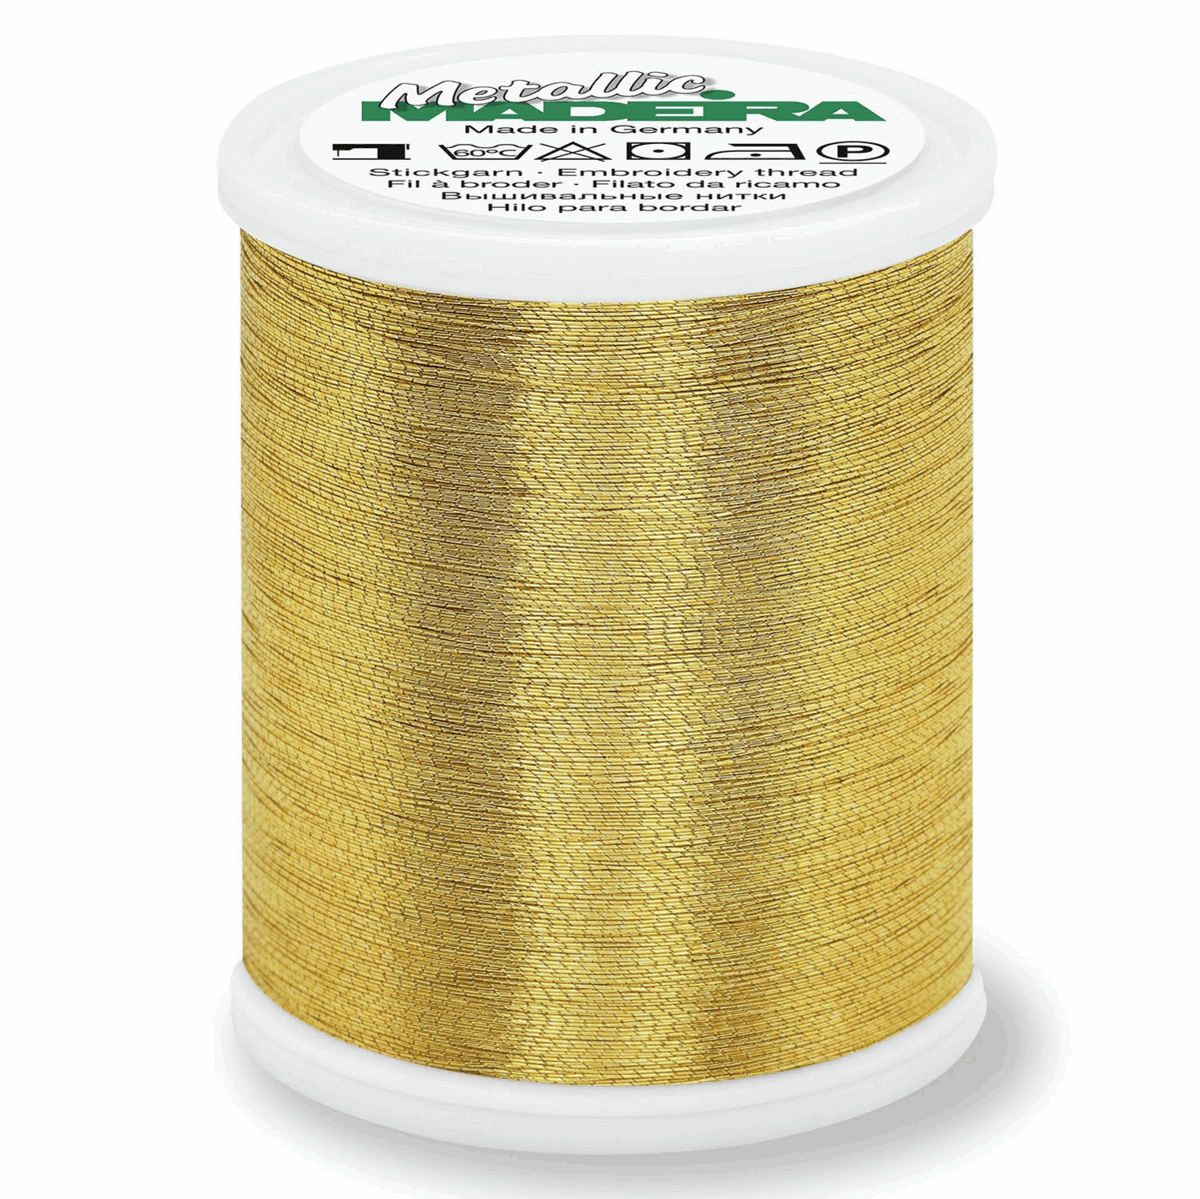  Madeira Metallic 40 Smooth Gift Box 8ct Thread Set, 200m per  Spool, Assorted